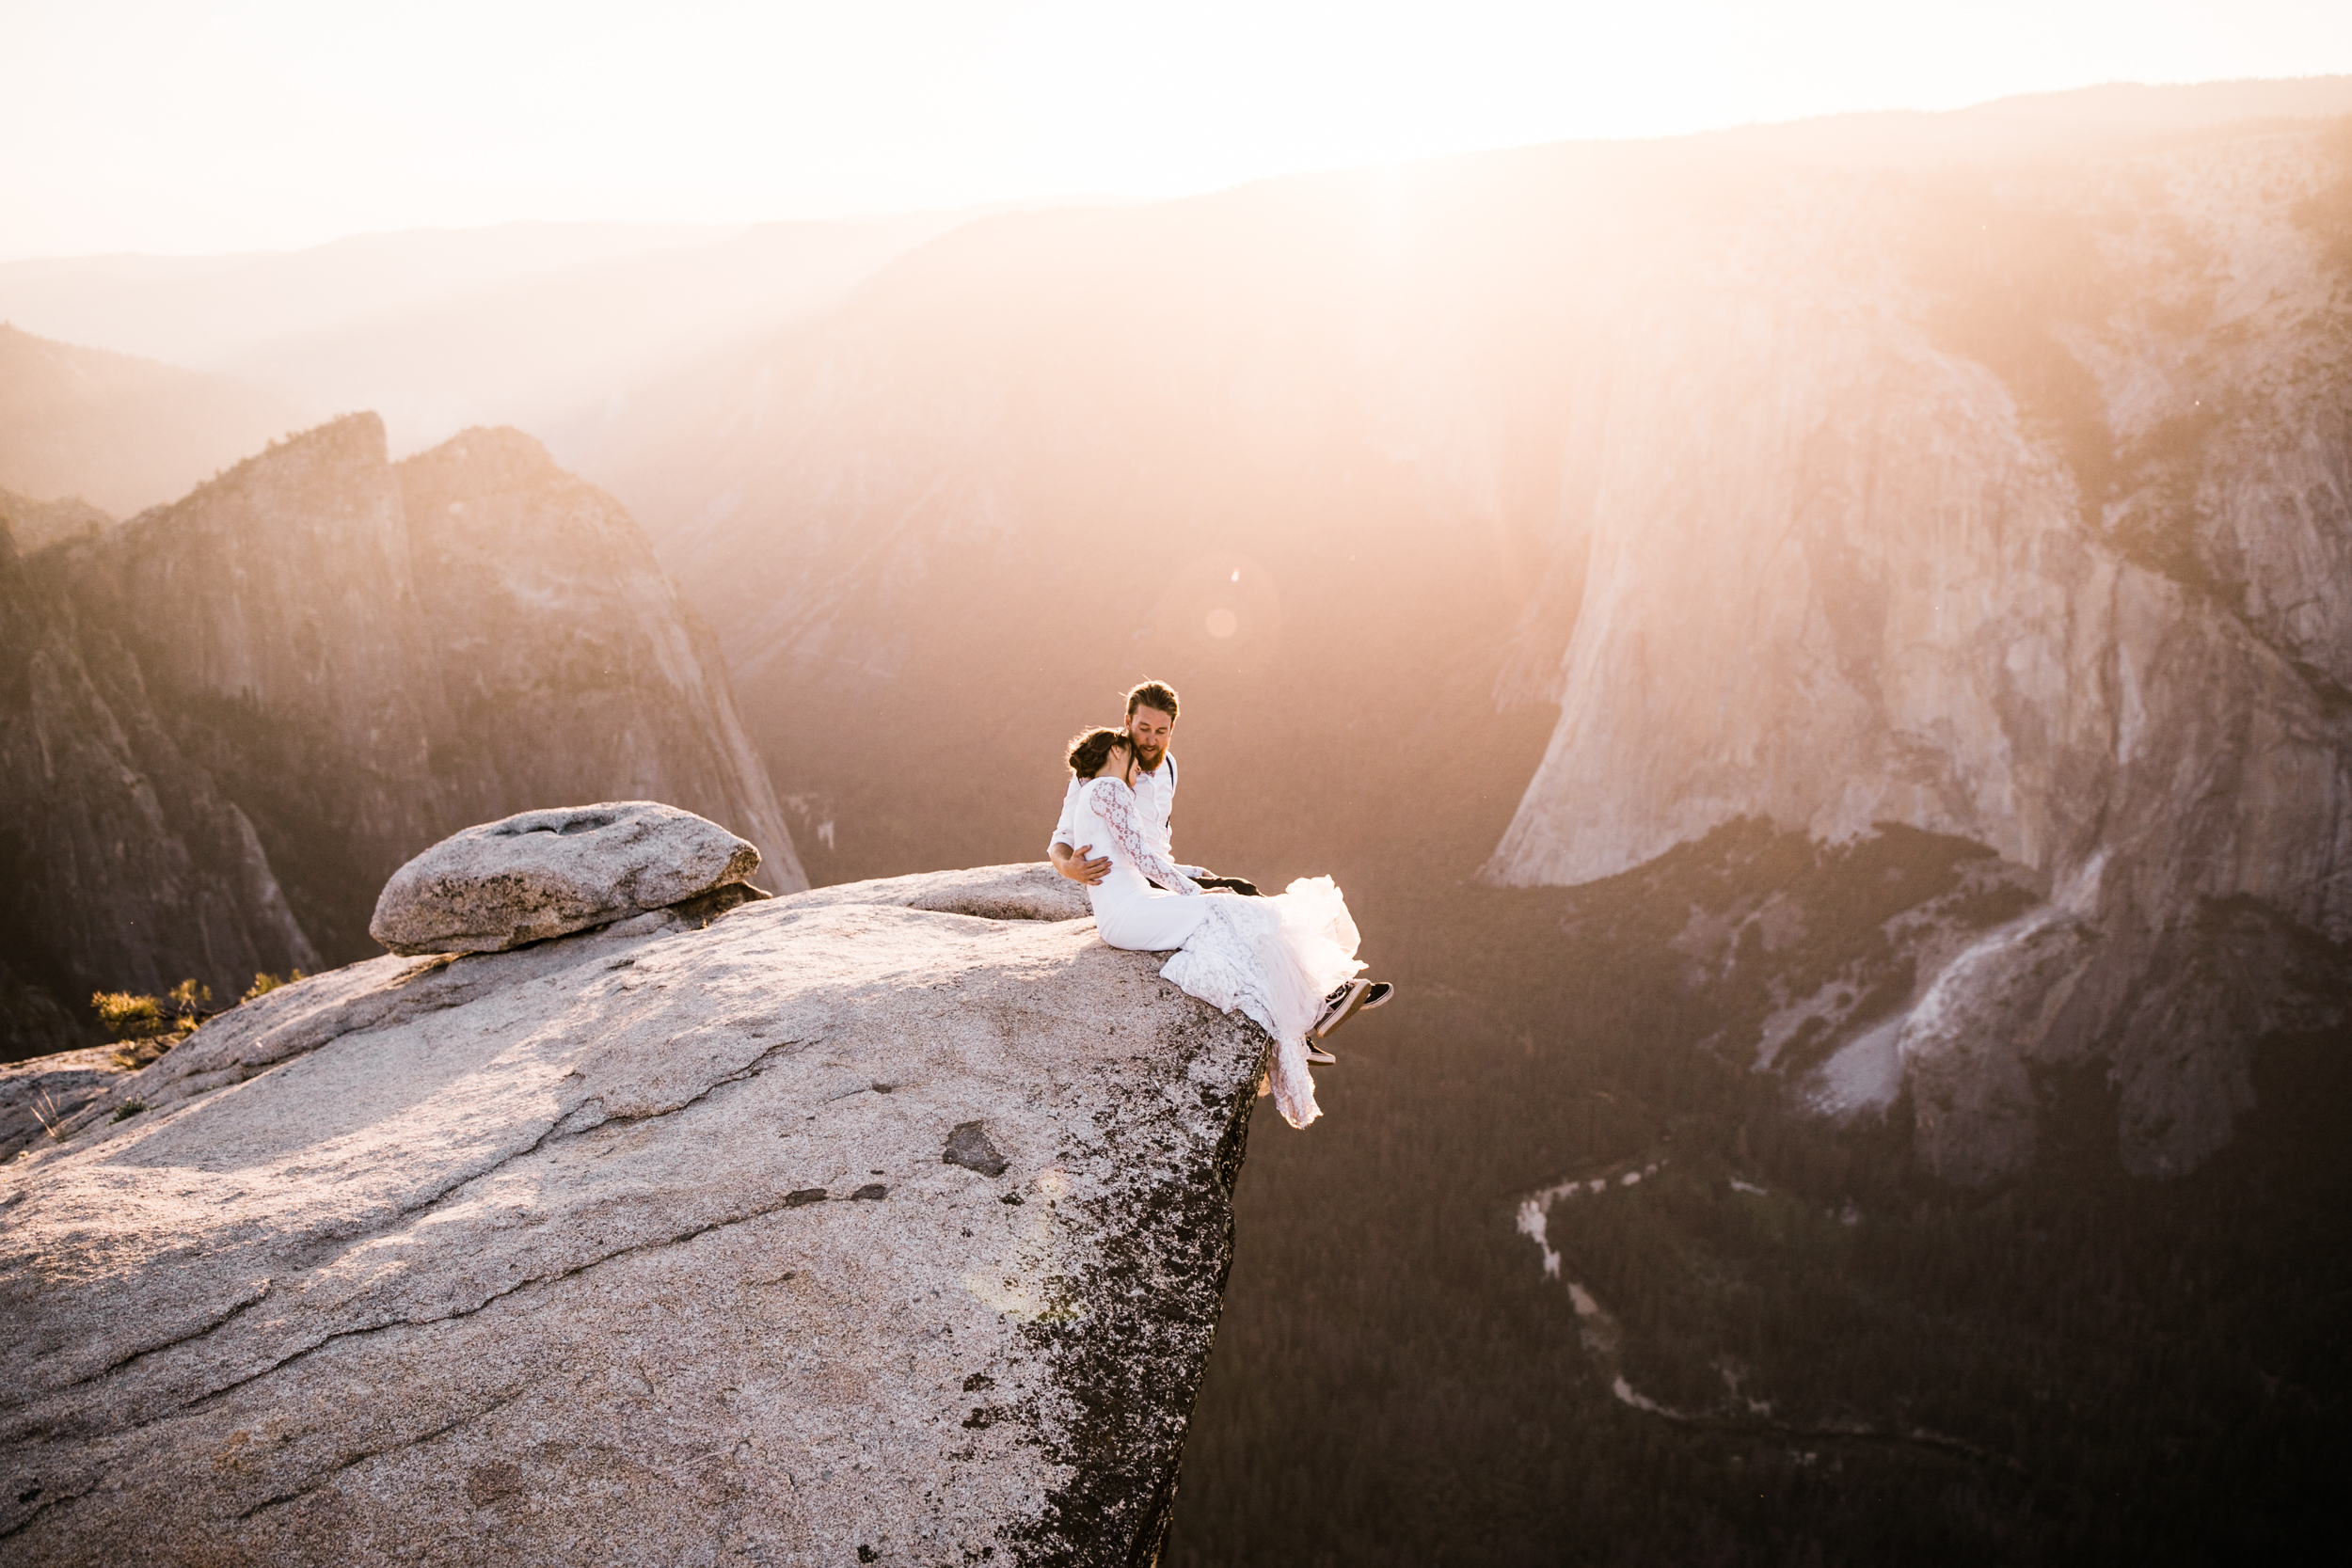 destination elopement in yosemite valley | adventure wedding portraits + romantic vows on a cliffside | national park elopement photographer | the hearnes adventure photography